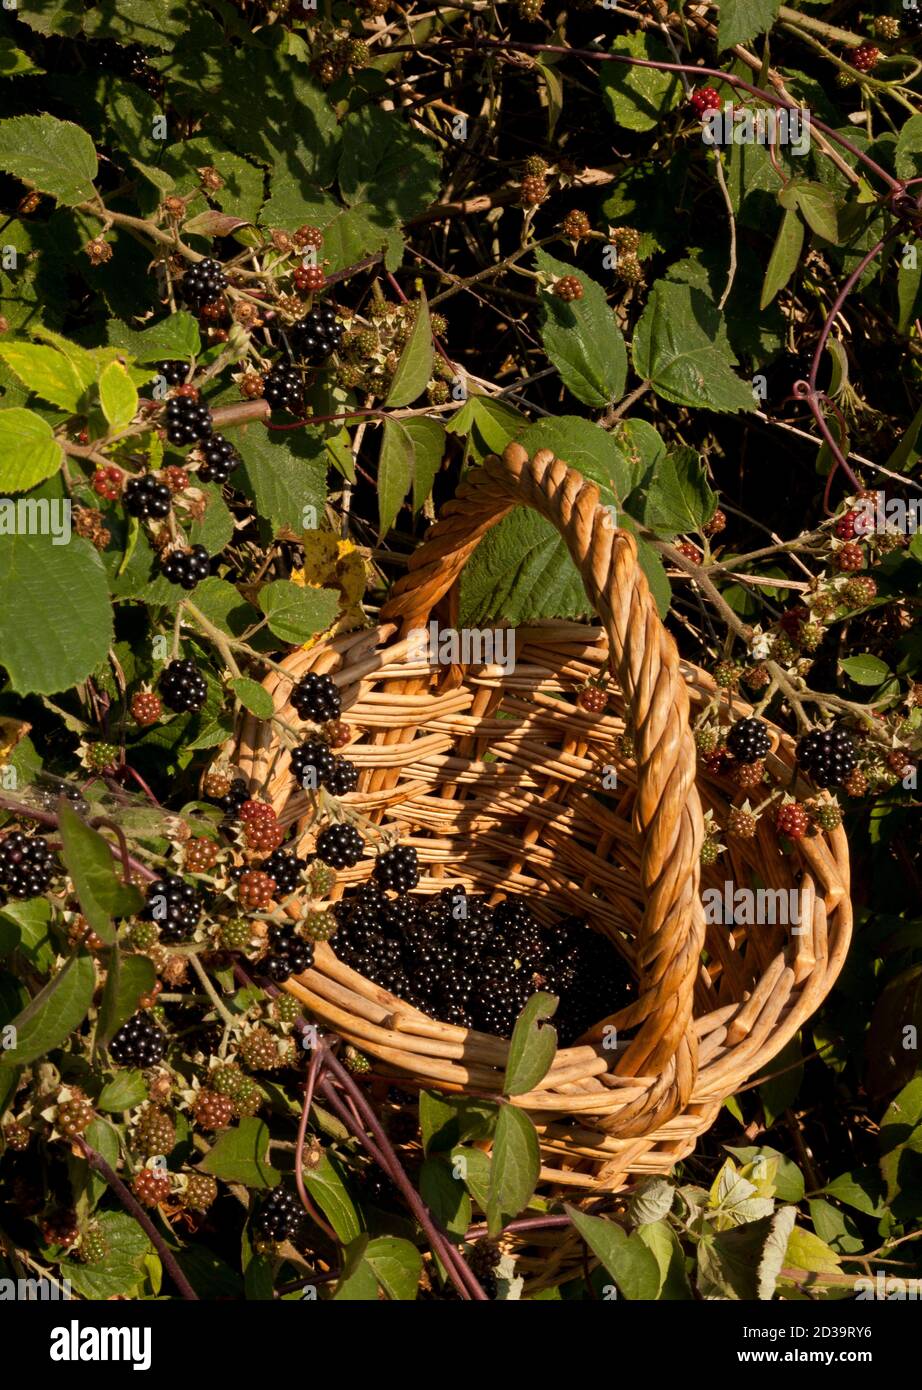 Blackberries in a basket Stock Photo